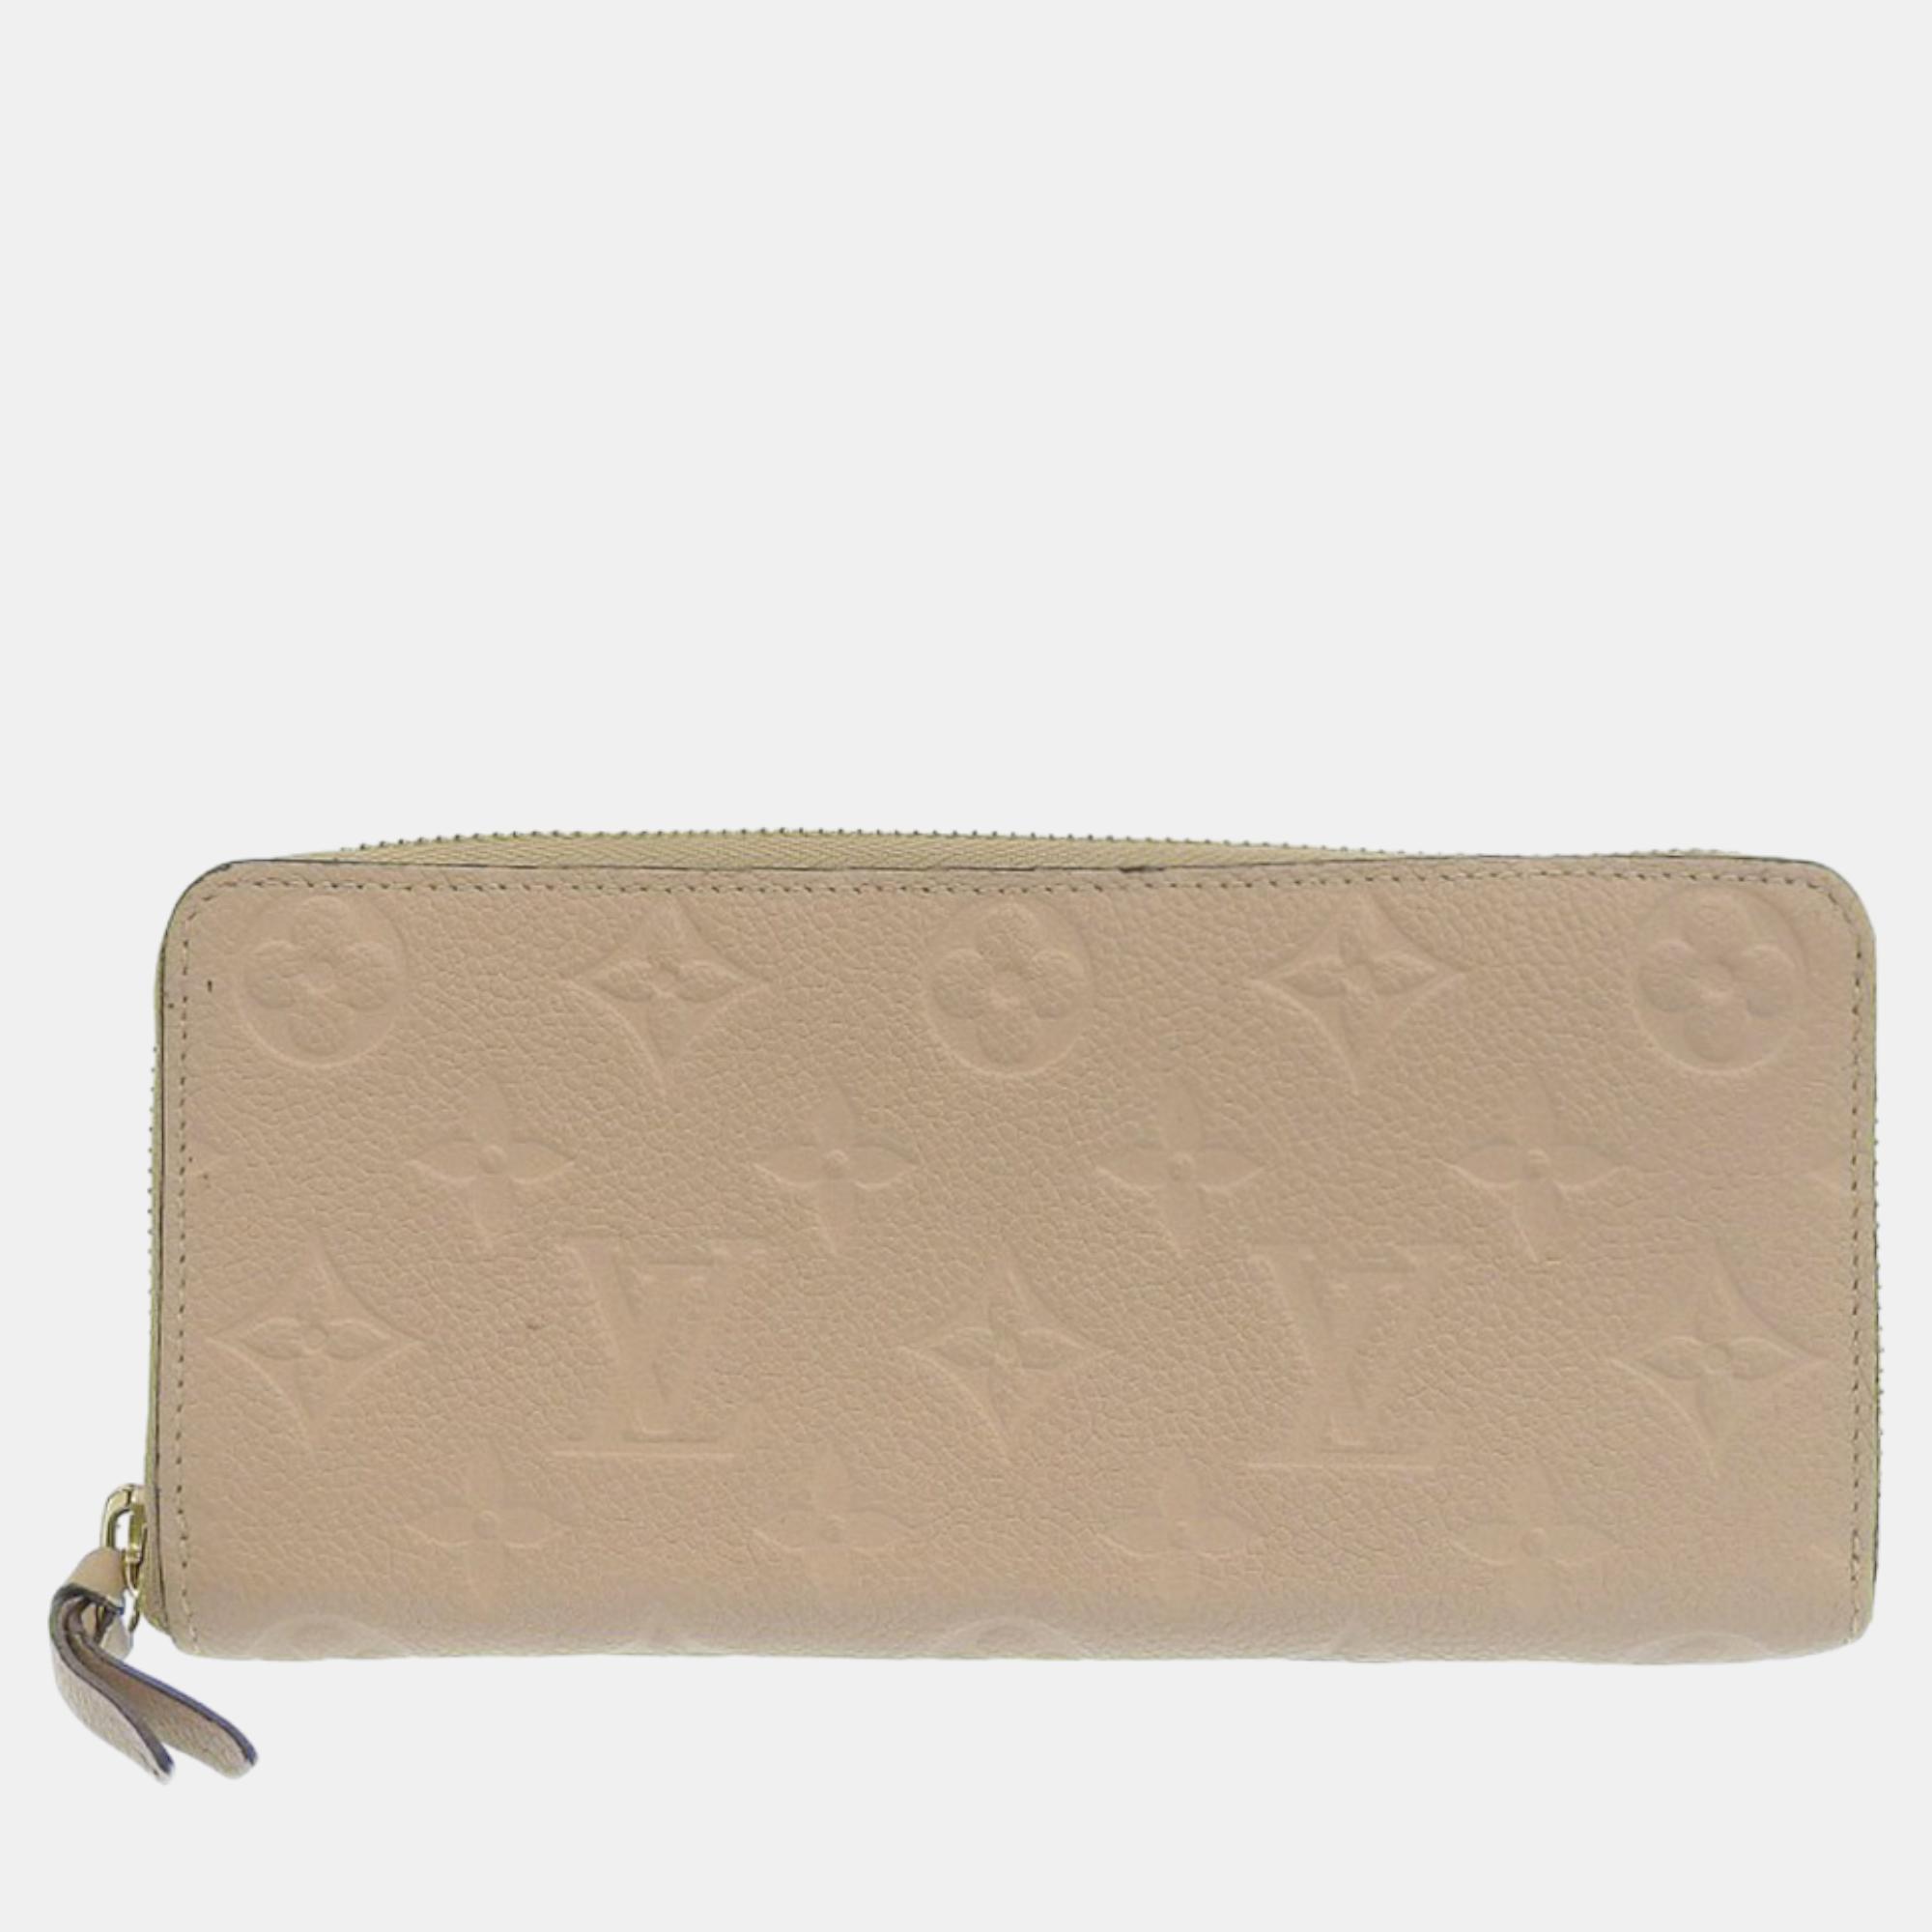 Louis vuitton beige leather portefeuille clemence long wallet